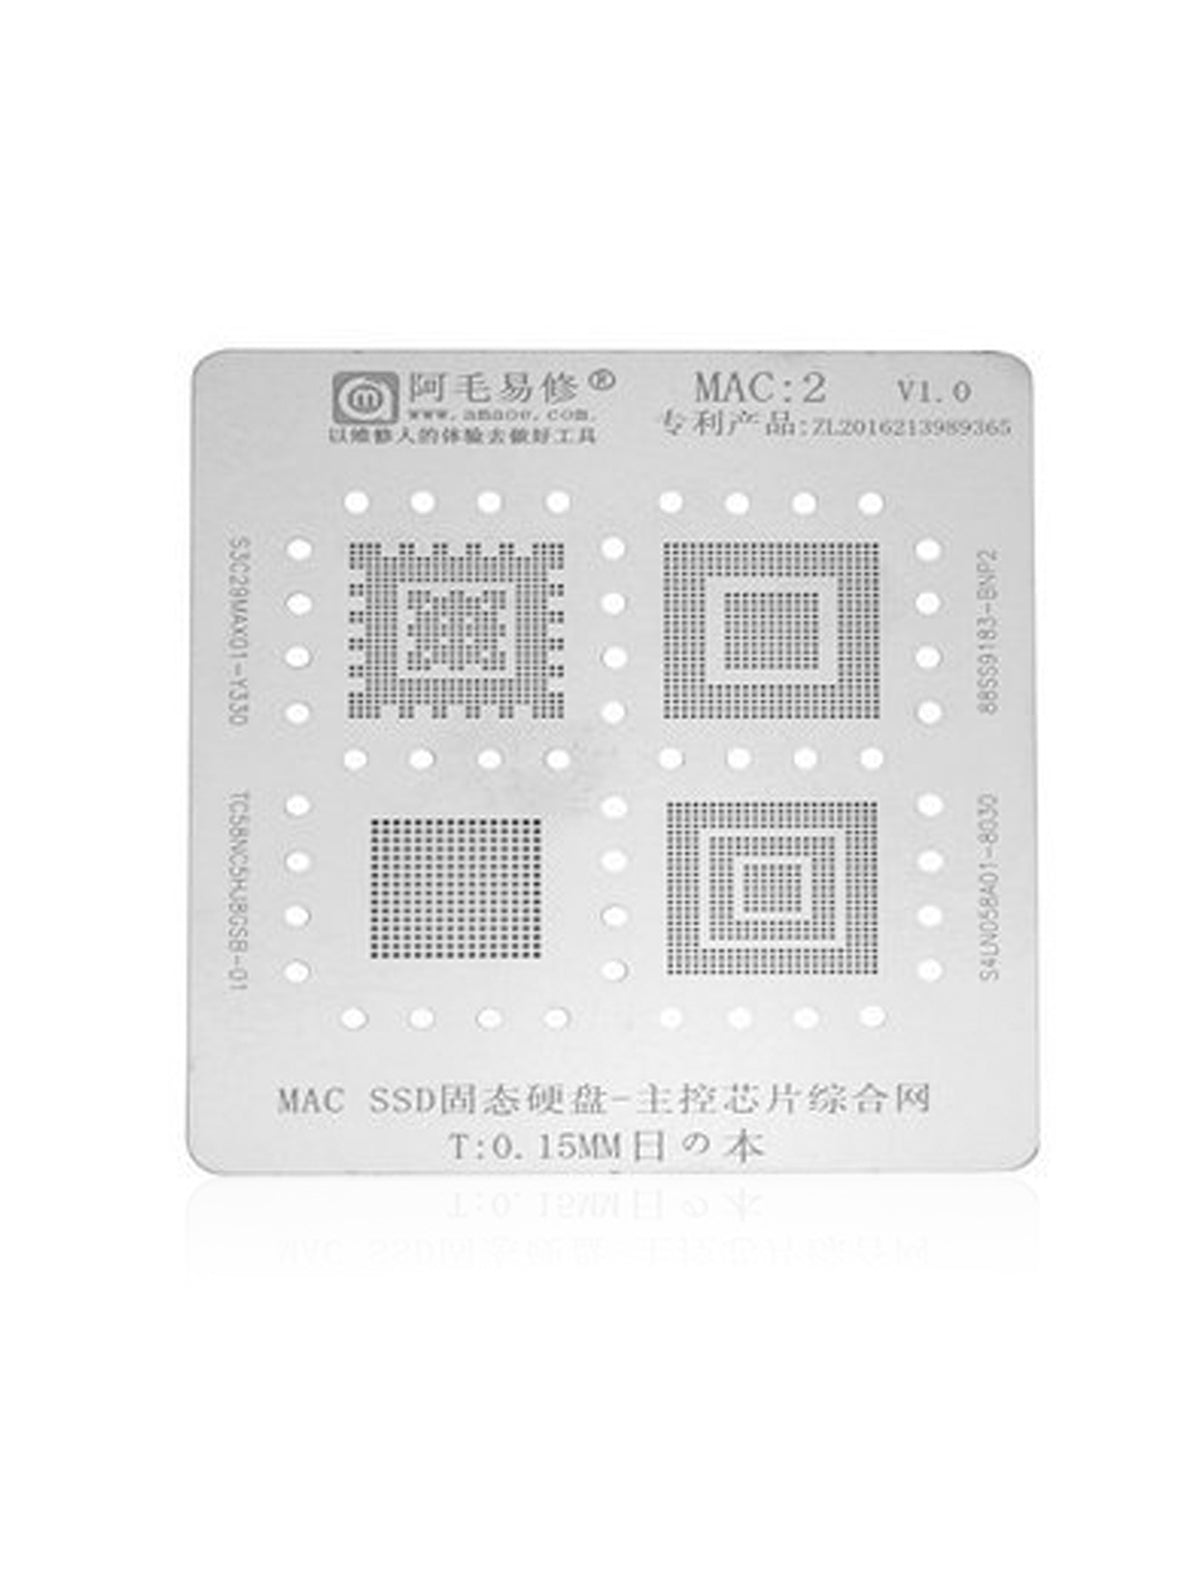 SSD STENCIL COMPATIBLE WITH MACBOOKS (MAC 2)